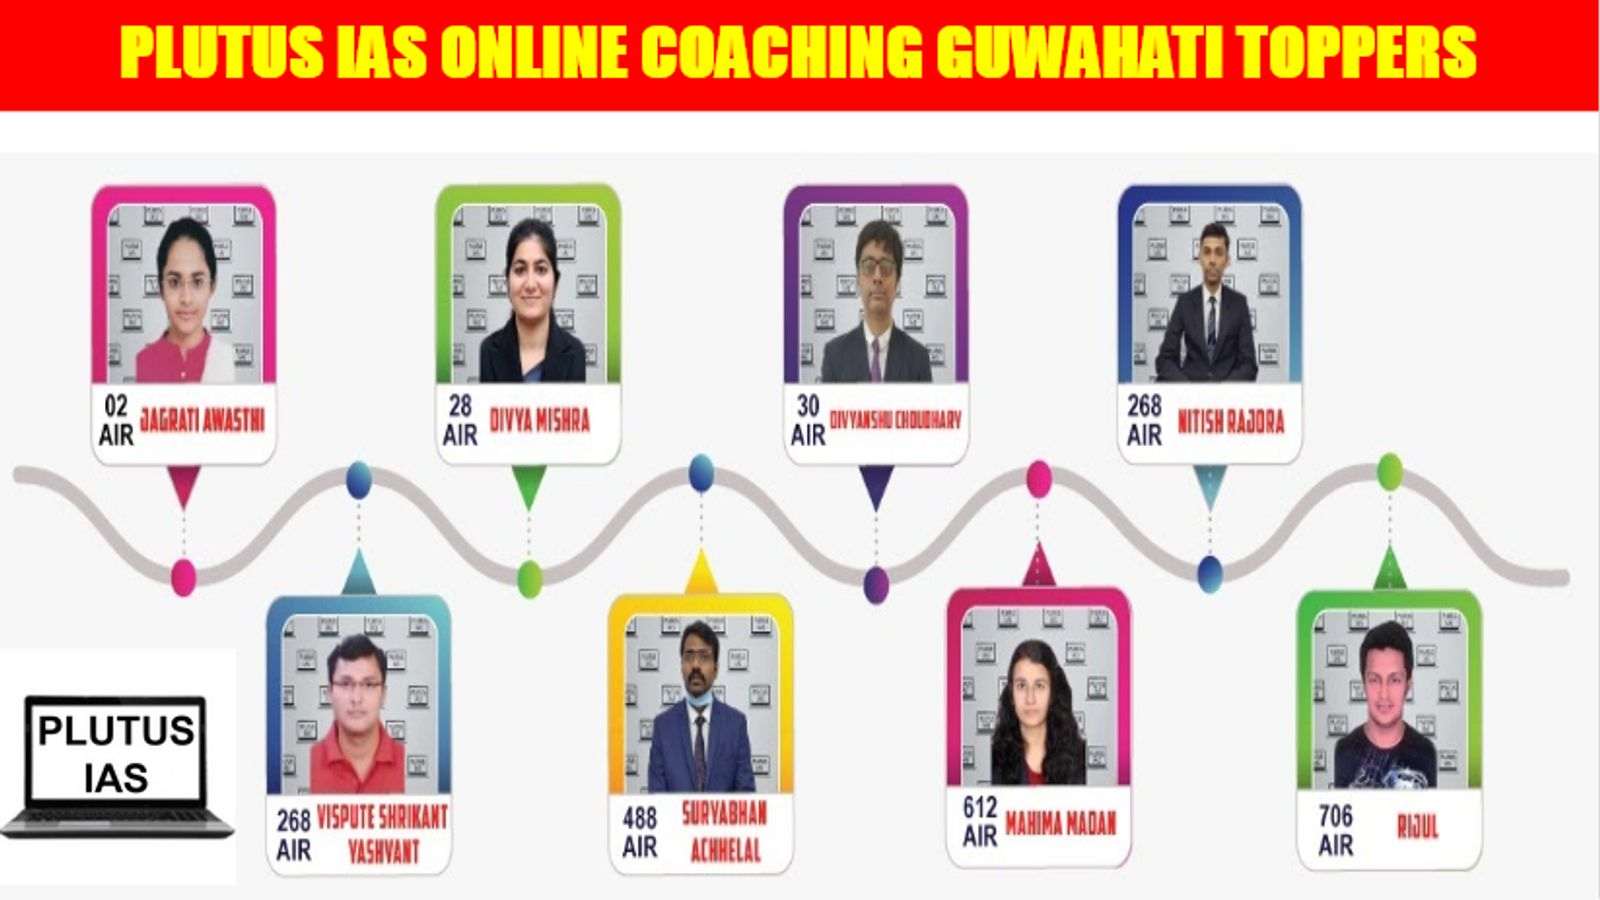 Plutus IAS Online Coaching Guwahati Toppers